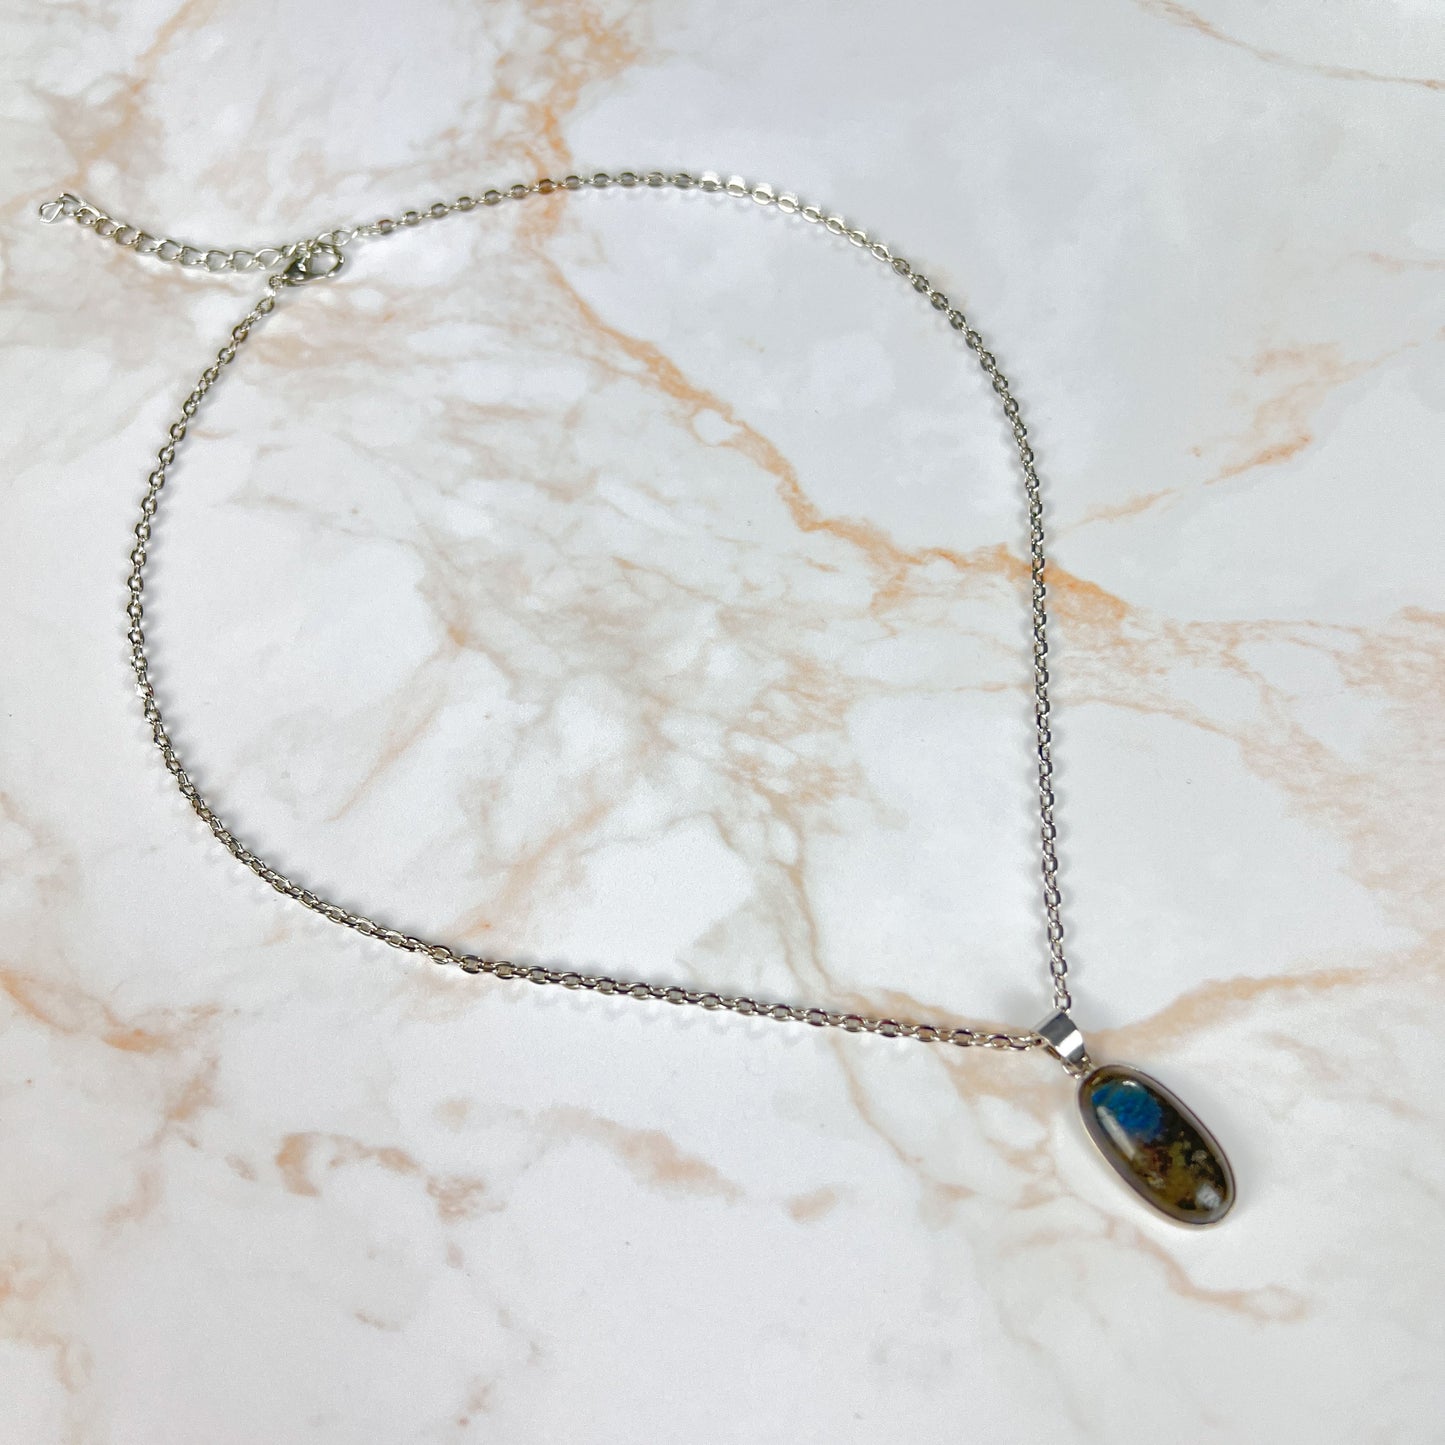 Labradorite pendant necklace lithotherapy jewelry